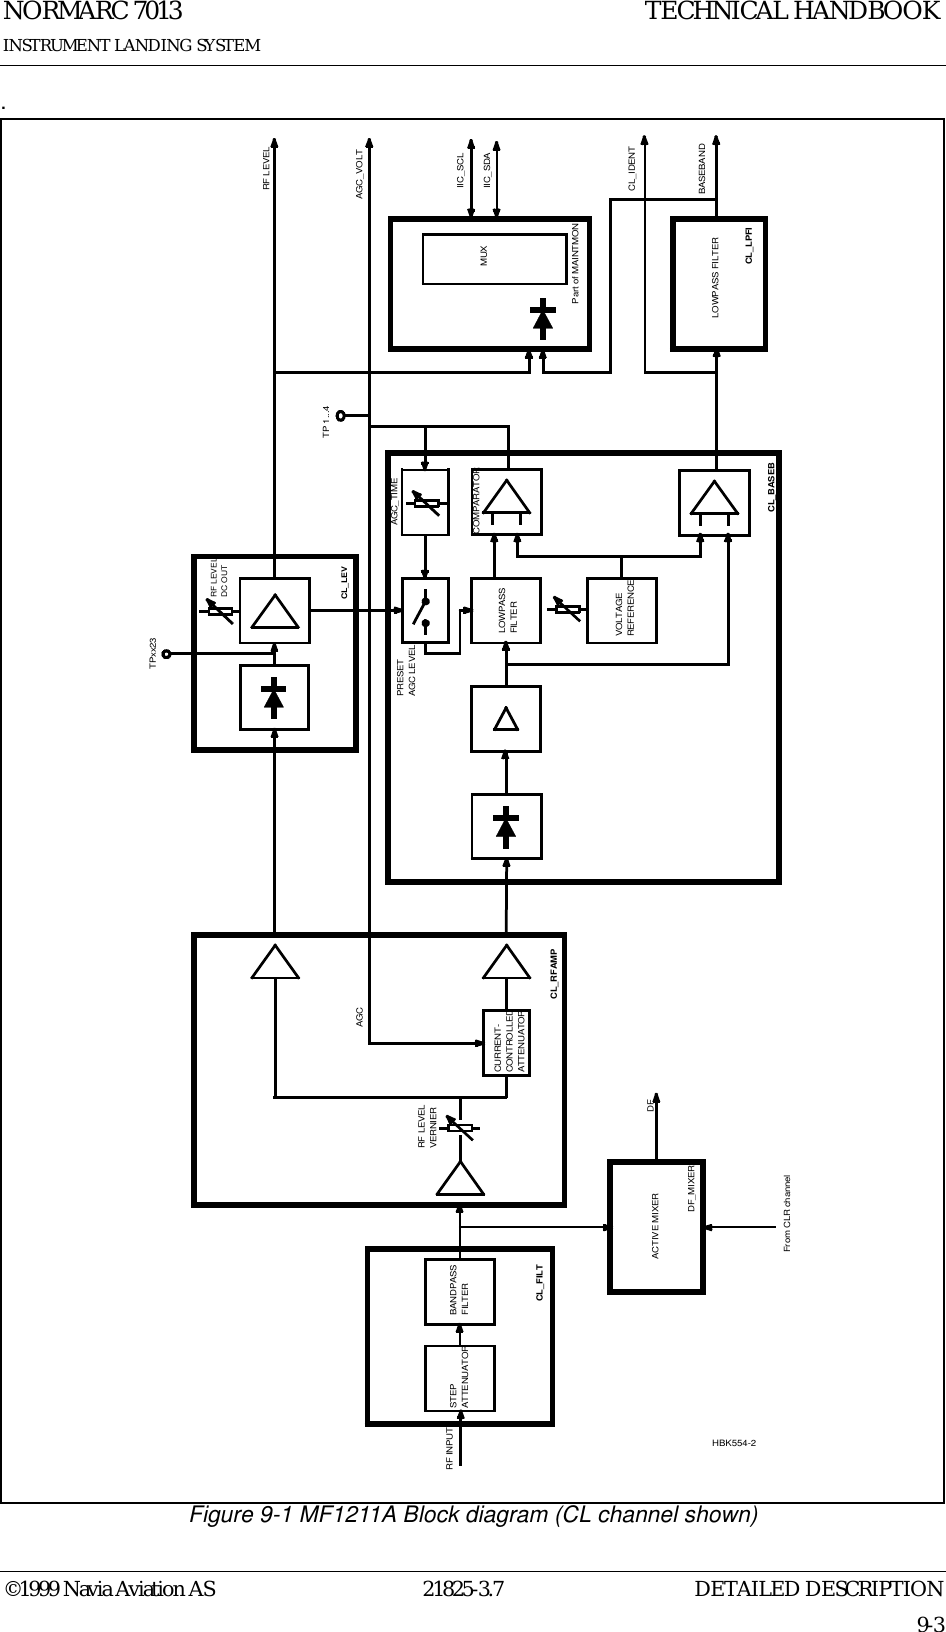 DETAILED DESCRIPTIONNORMARC 701321825-3.79-3INSTRUMENT LANDING SYSTEMTECHNICAL HANDBOOK©1999 Navia Aviation AS.Figure 9-1 MF1211A Block diagram (CL channel shown)CL_BASEBCURRENT-CONTROLLEDATTENUATORCL_RFAMPRF LEVELVERNIERSTEPATTENUATORBANDPASSFILTERCL_FILTLOWPASS FILTERBASEBANDRF INPUTCL_LPFIDF_MIXERACTIVE MIXERFrom CLR channelDFLOWPASSFILTERPRESETAGC LEVELRF LEVELDC OUTCL_LEVRF LEVELAGCMUXPart of MAINTMONCL_IDENTIIC_SDAIIC_SCLVOLTAGEREFERENCECOMPARATORAGC_VOLTTP 1...4TPxx23AGC_TIMEHBK554-2